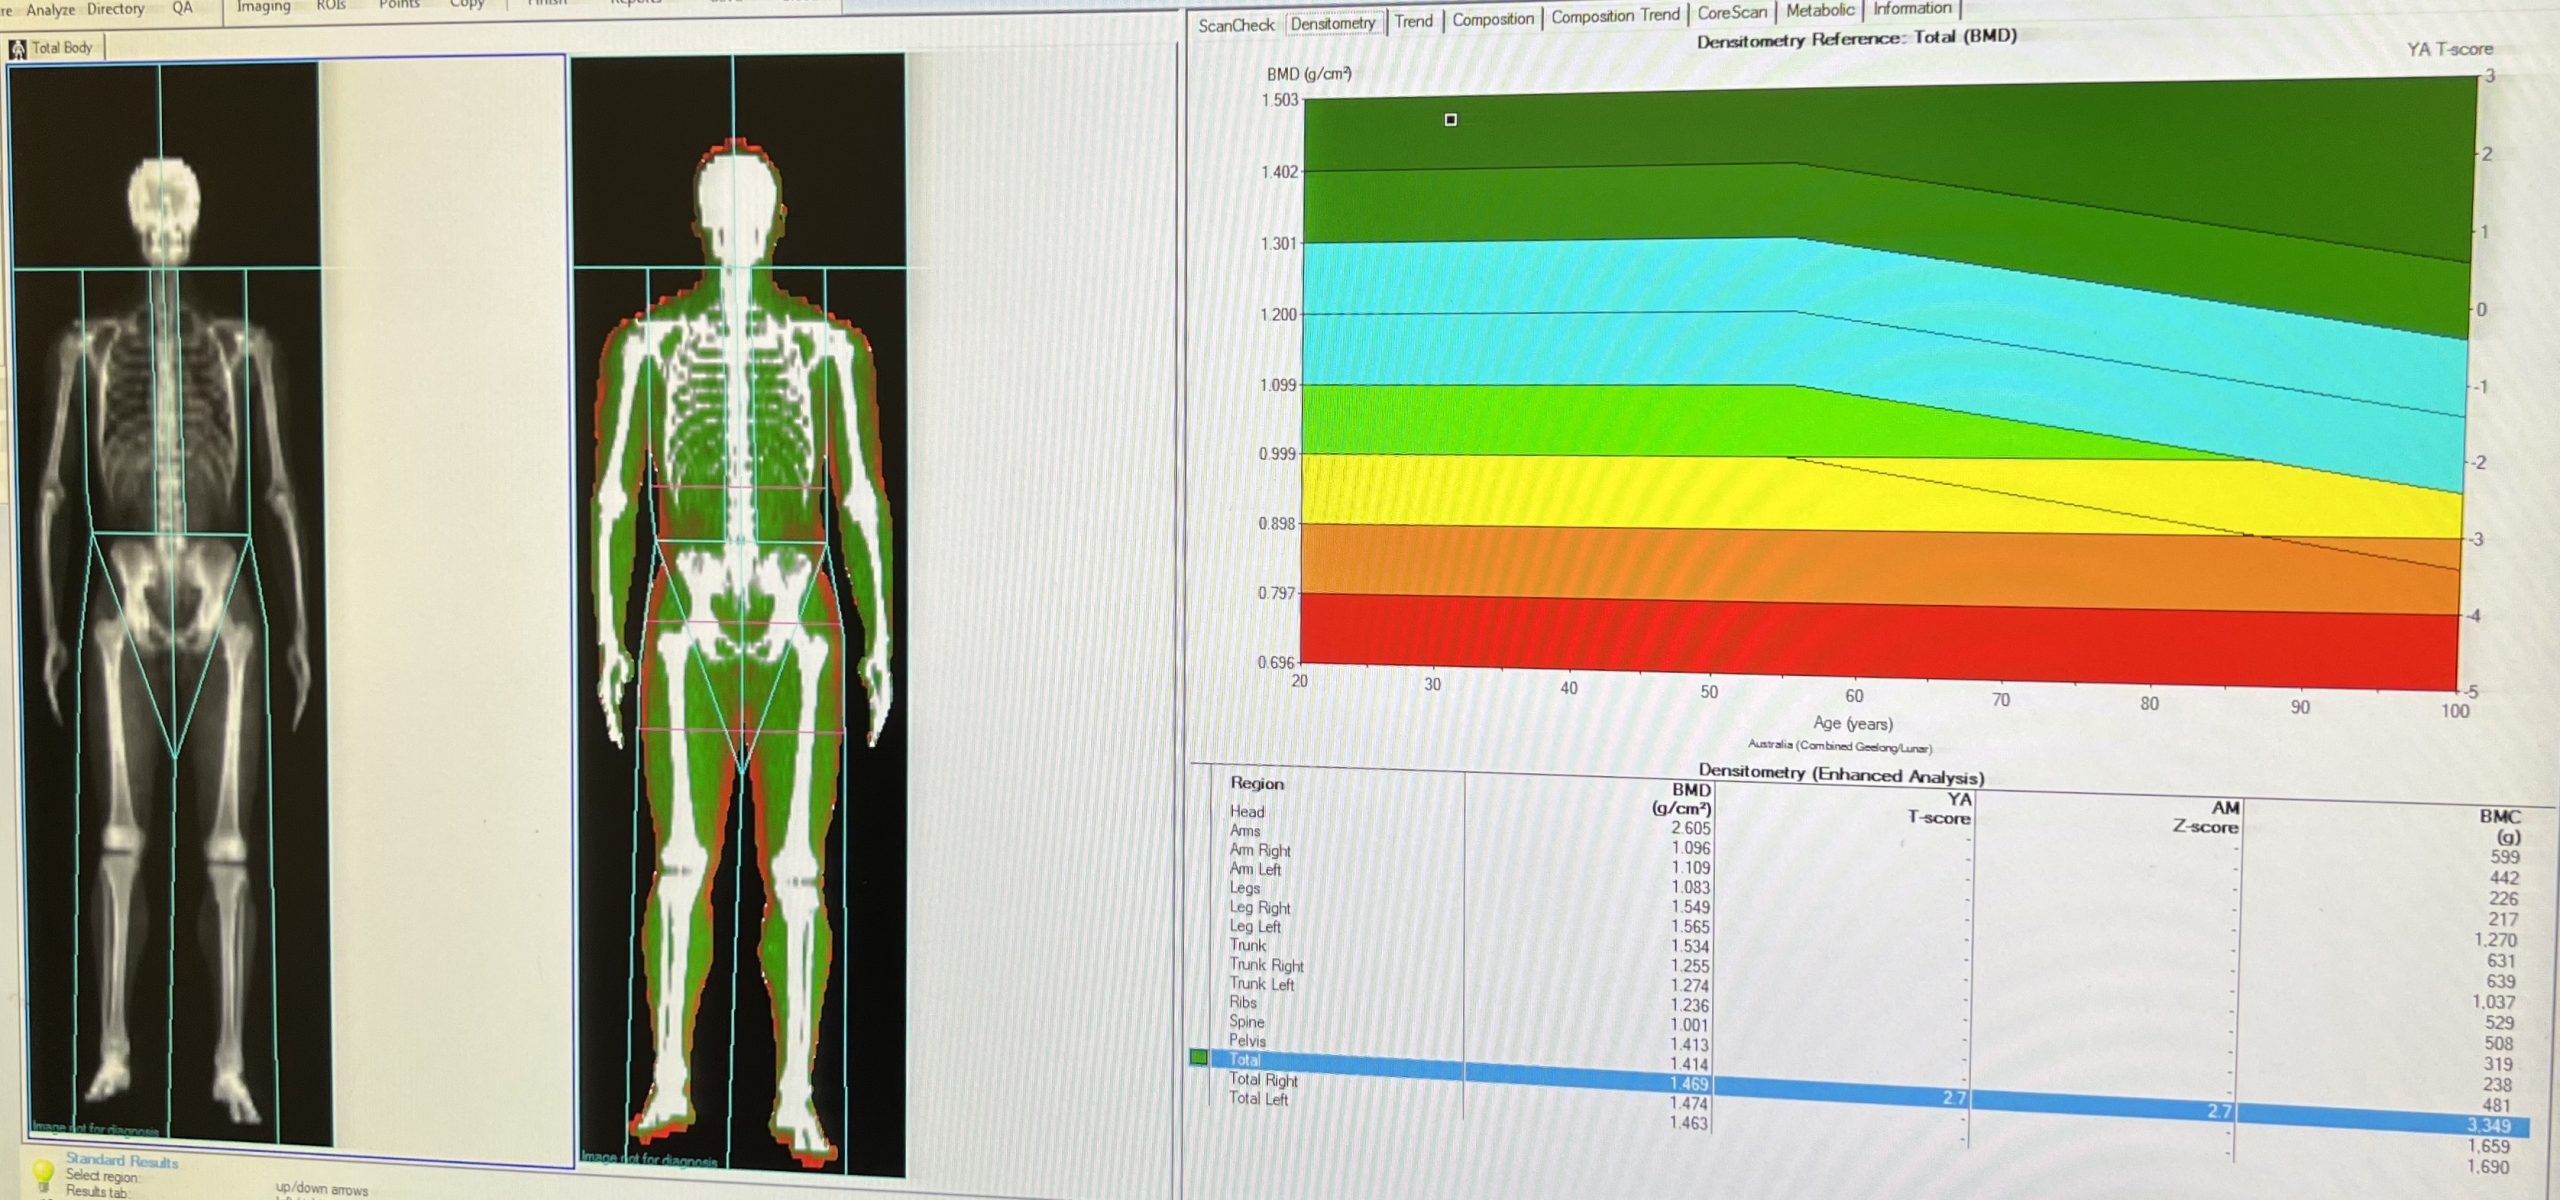 dexa scan bone density results